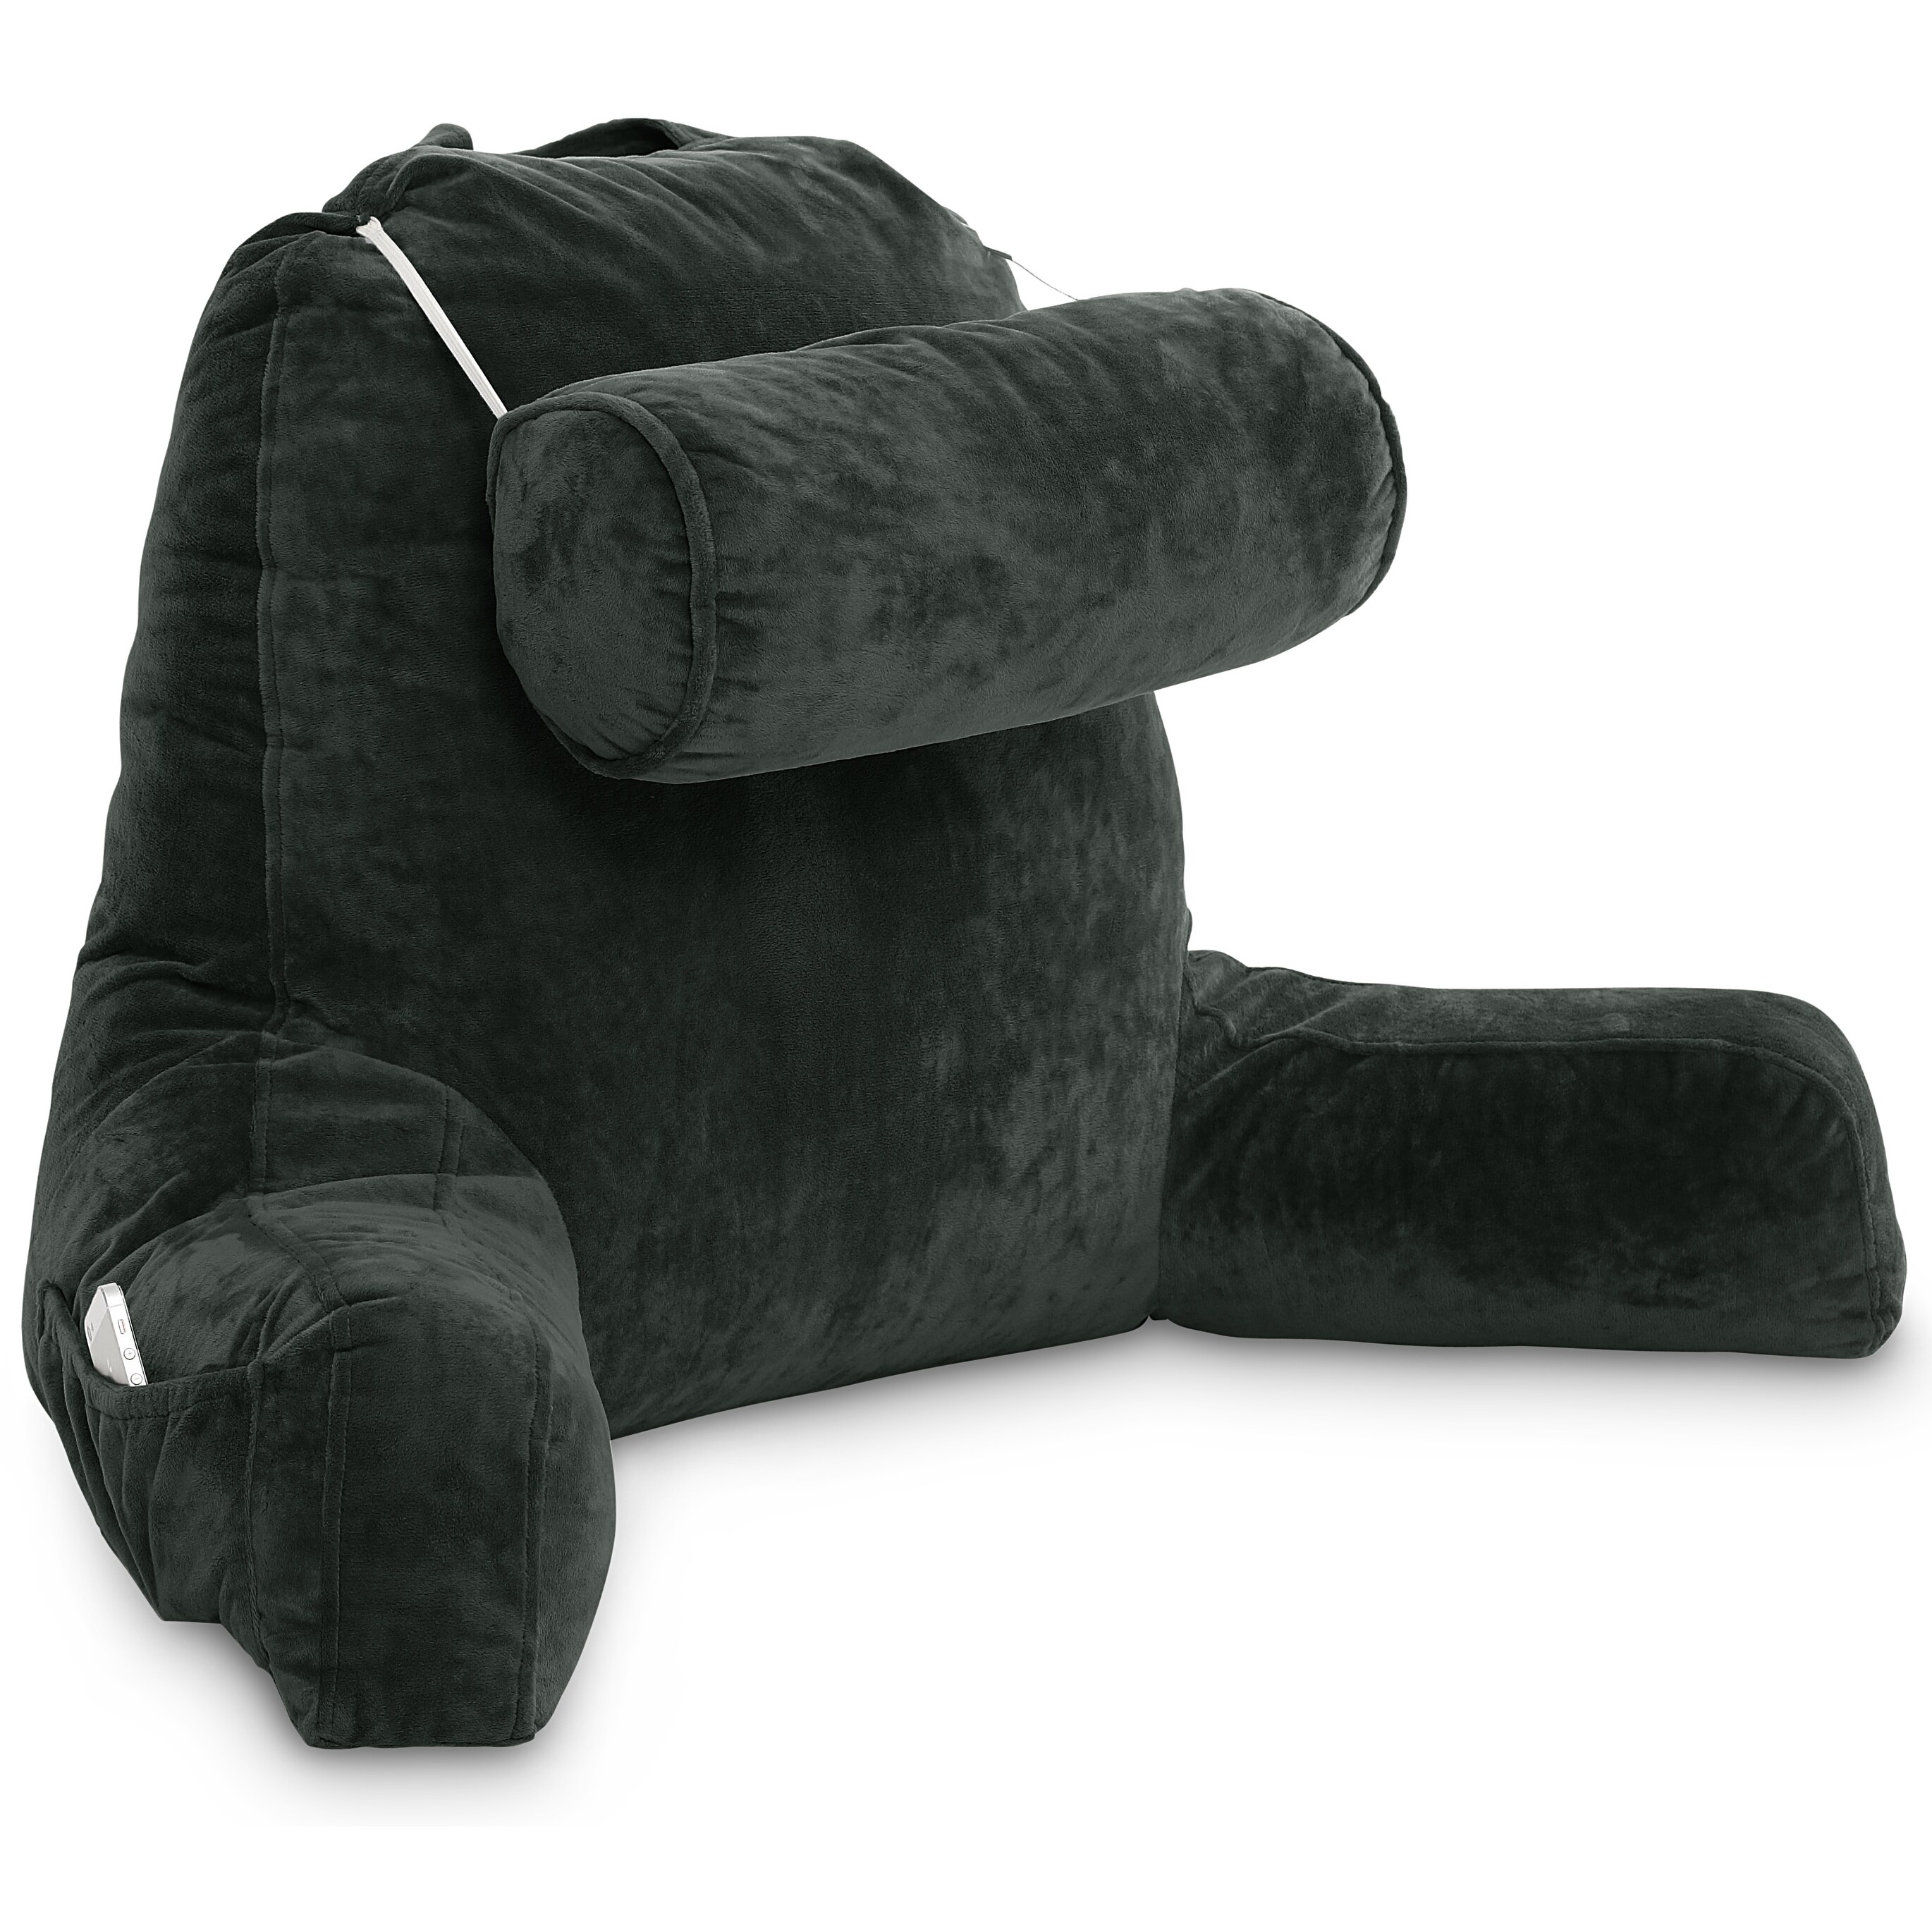 https://ak1.ostkcdn.com/images/products/30264505/Husband-Pillow-Bedrest-Reading-Support-Bed-Backrest-w-Arms-Shredded-Foam-Reading-Pillow-Bed-Rest-Pillow-eb003ff8-8400-47e5-af58-5315f03a70b0.jpg